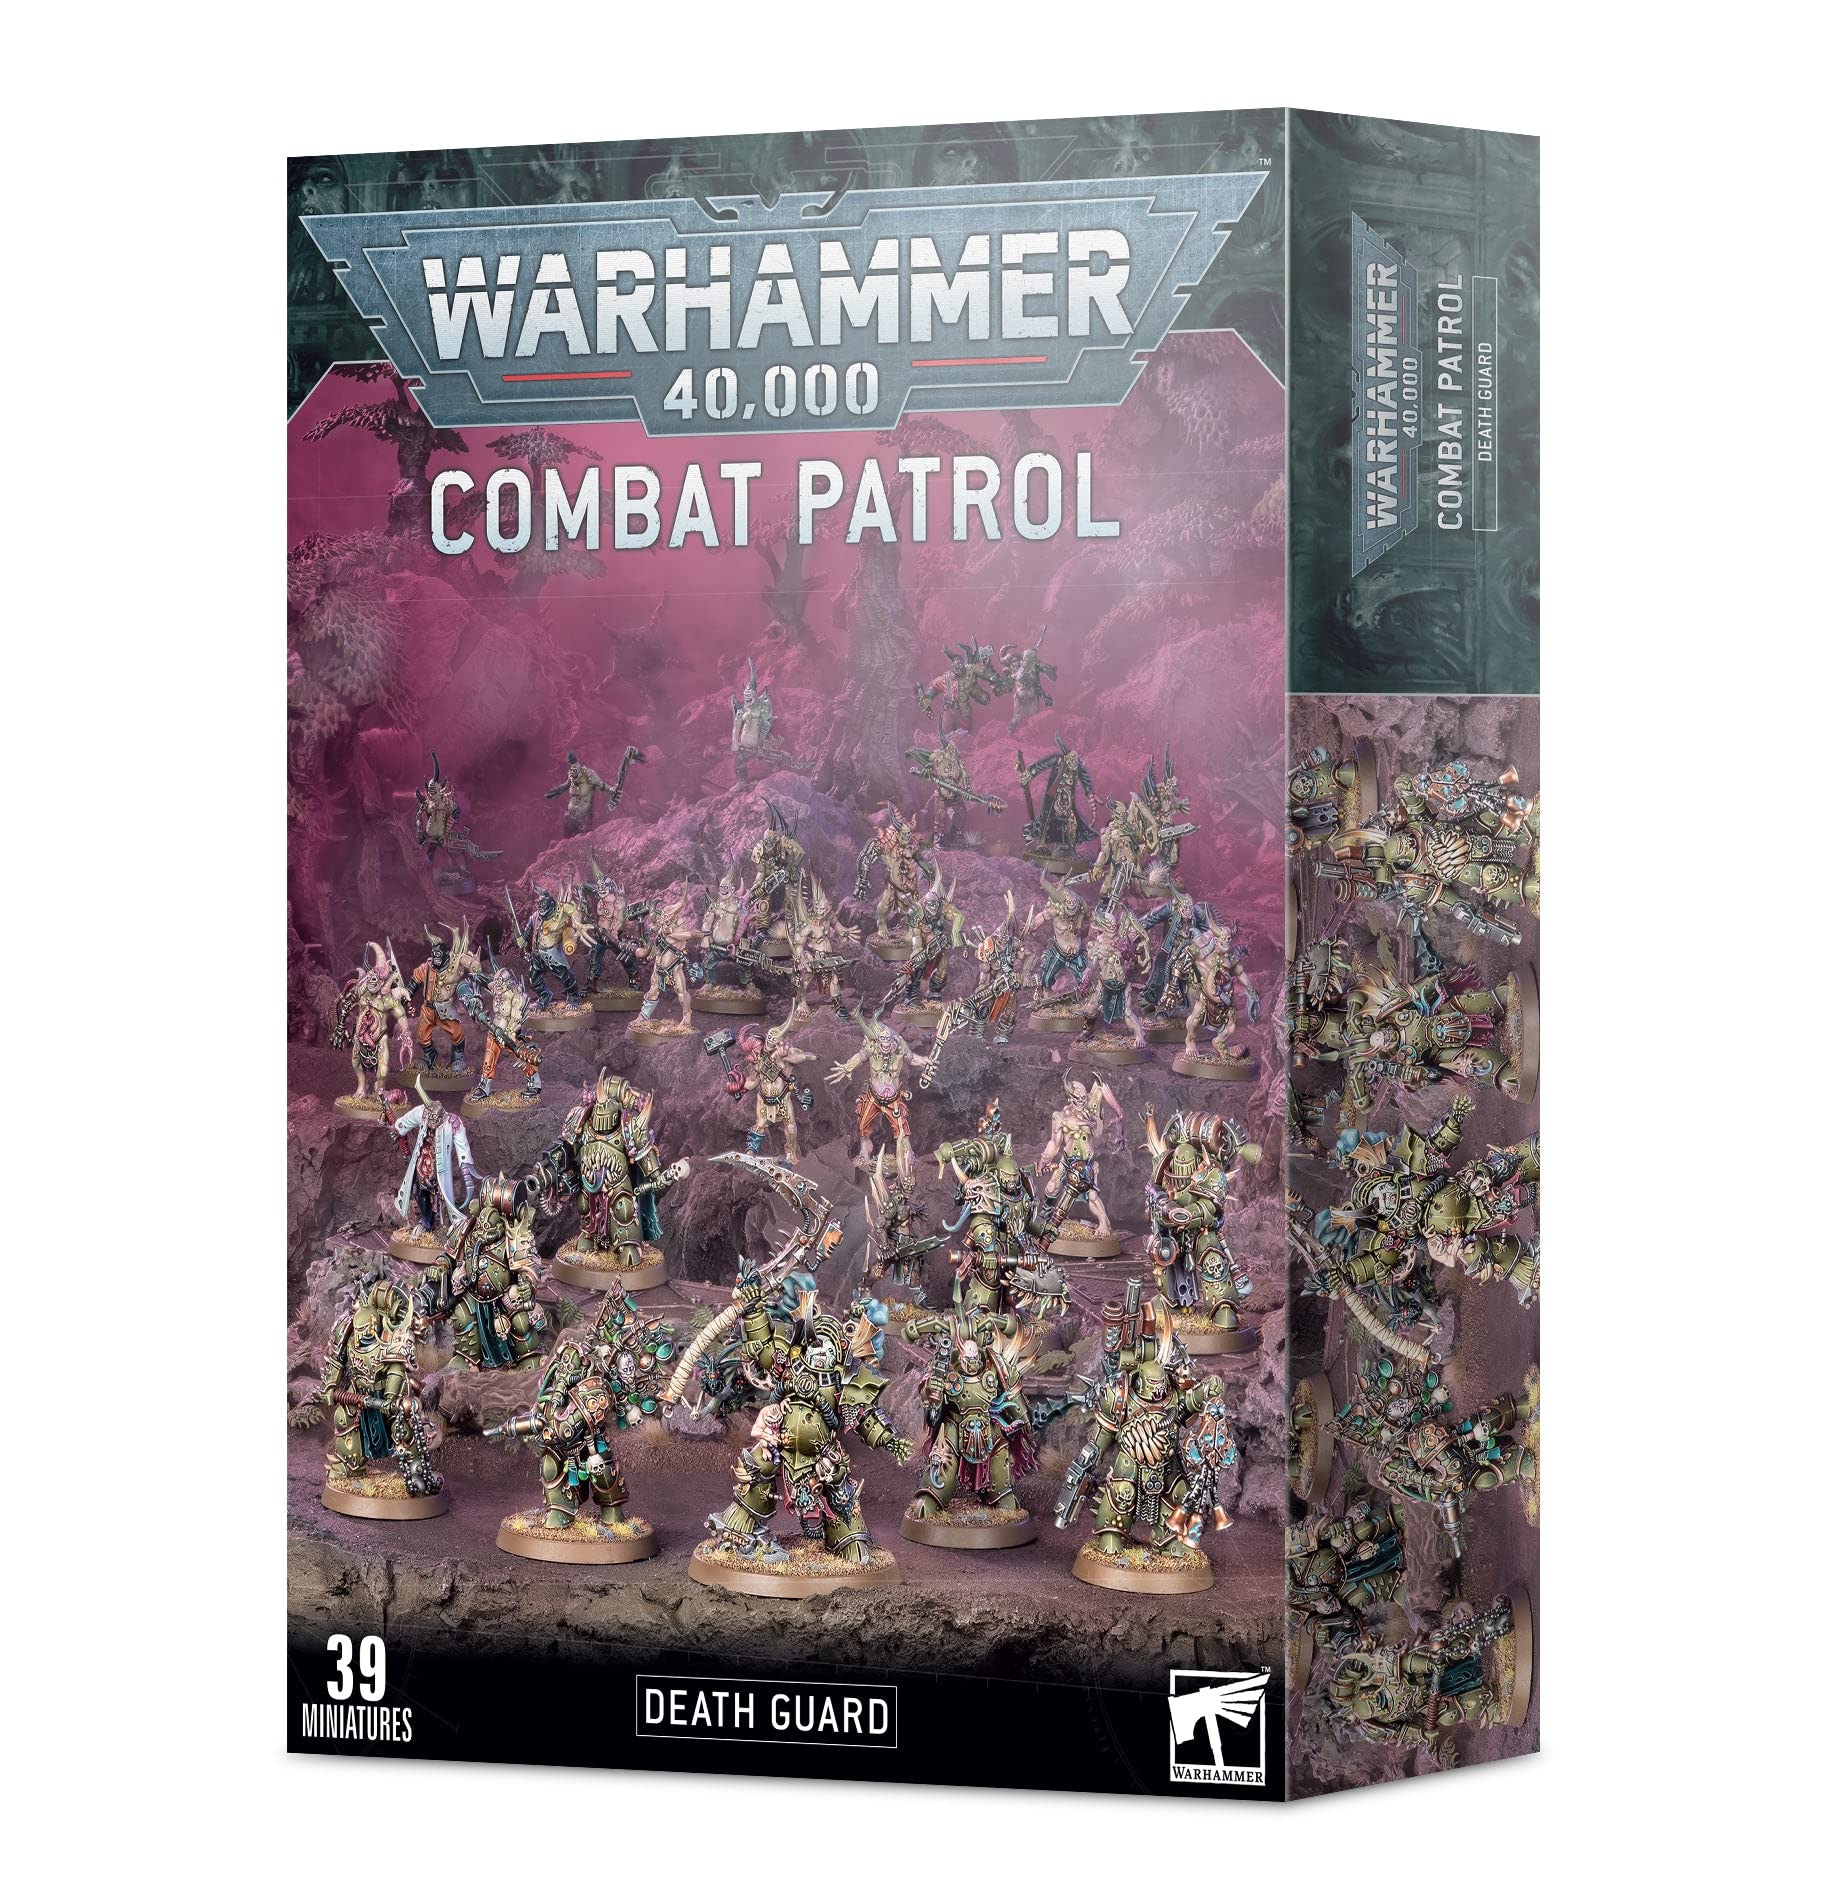 games Workshop Warhammer 40,000 combat Patrol Death guard Box Set